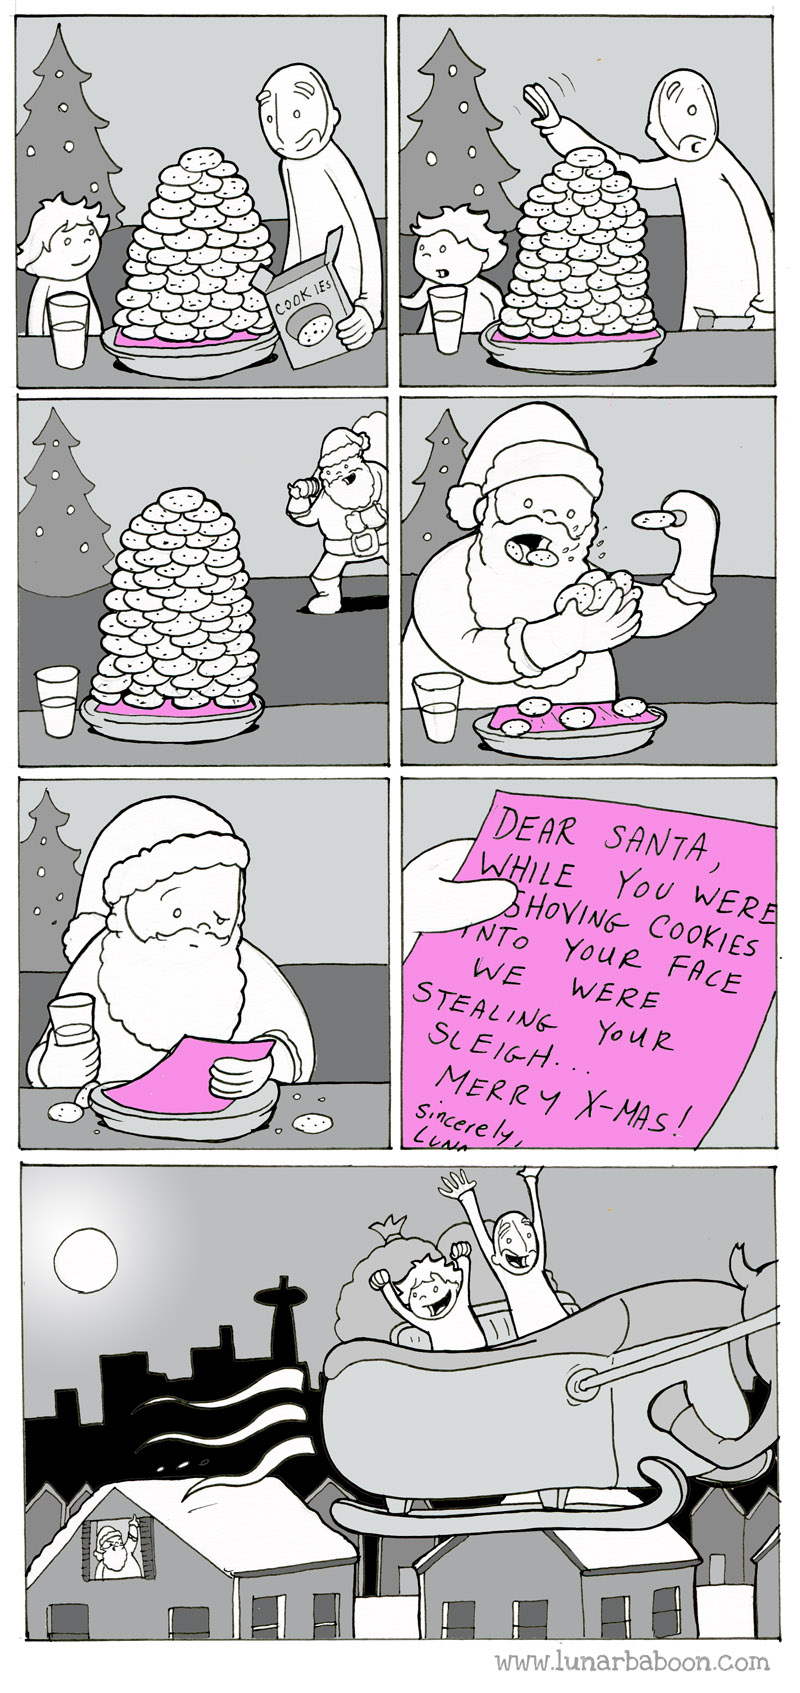 funny-comics-lunarbaboon-sleigh-santa-claus